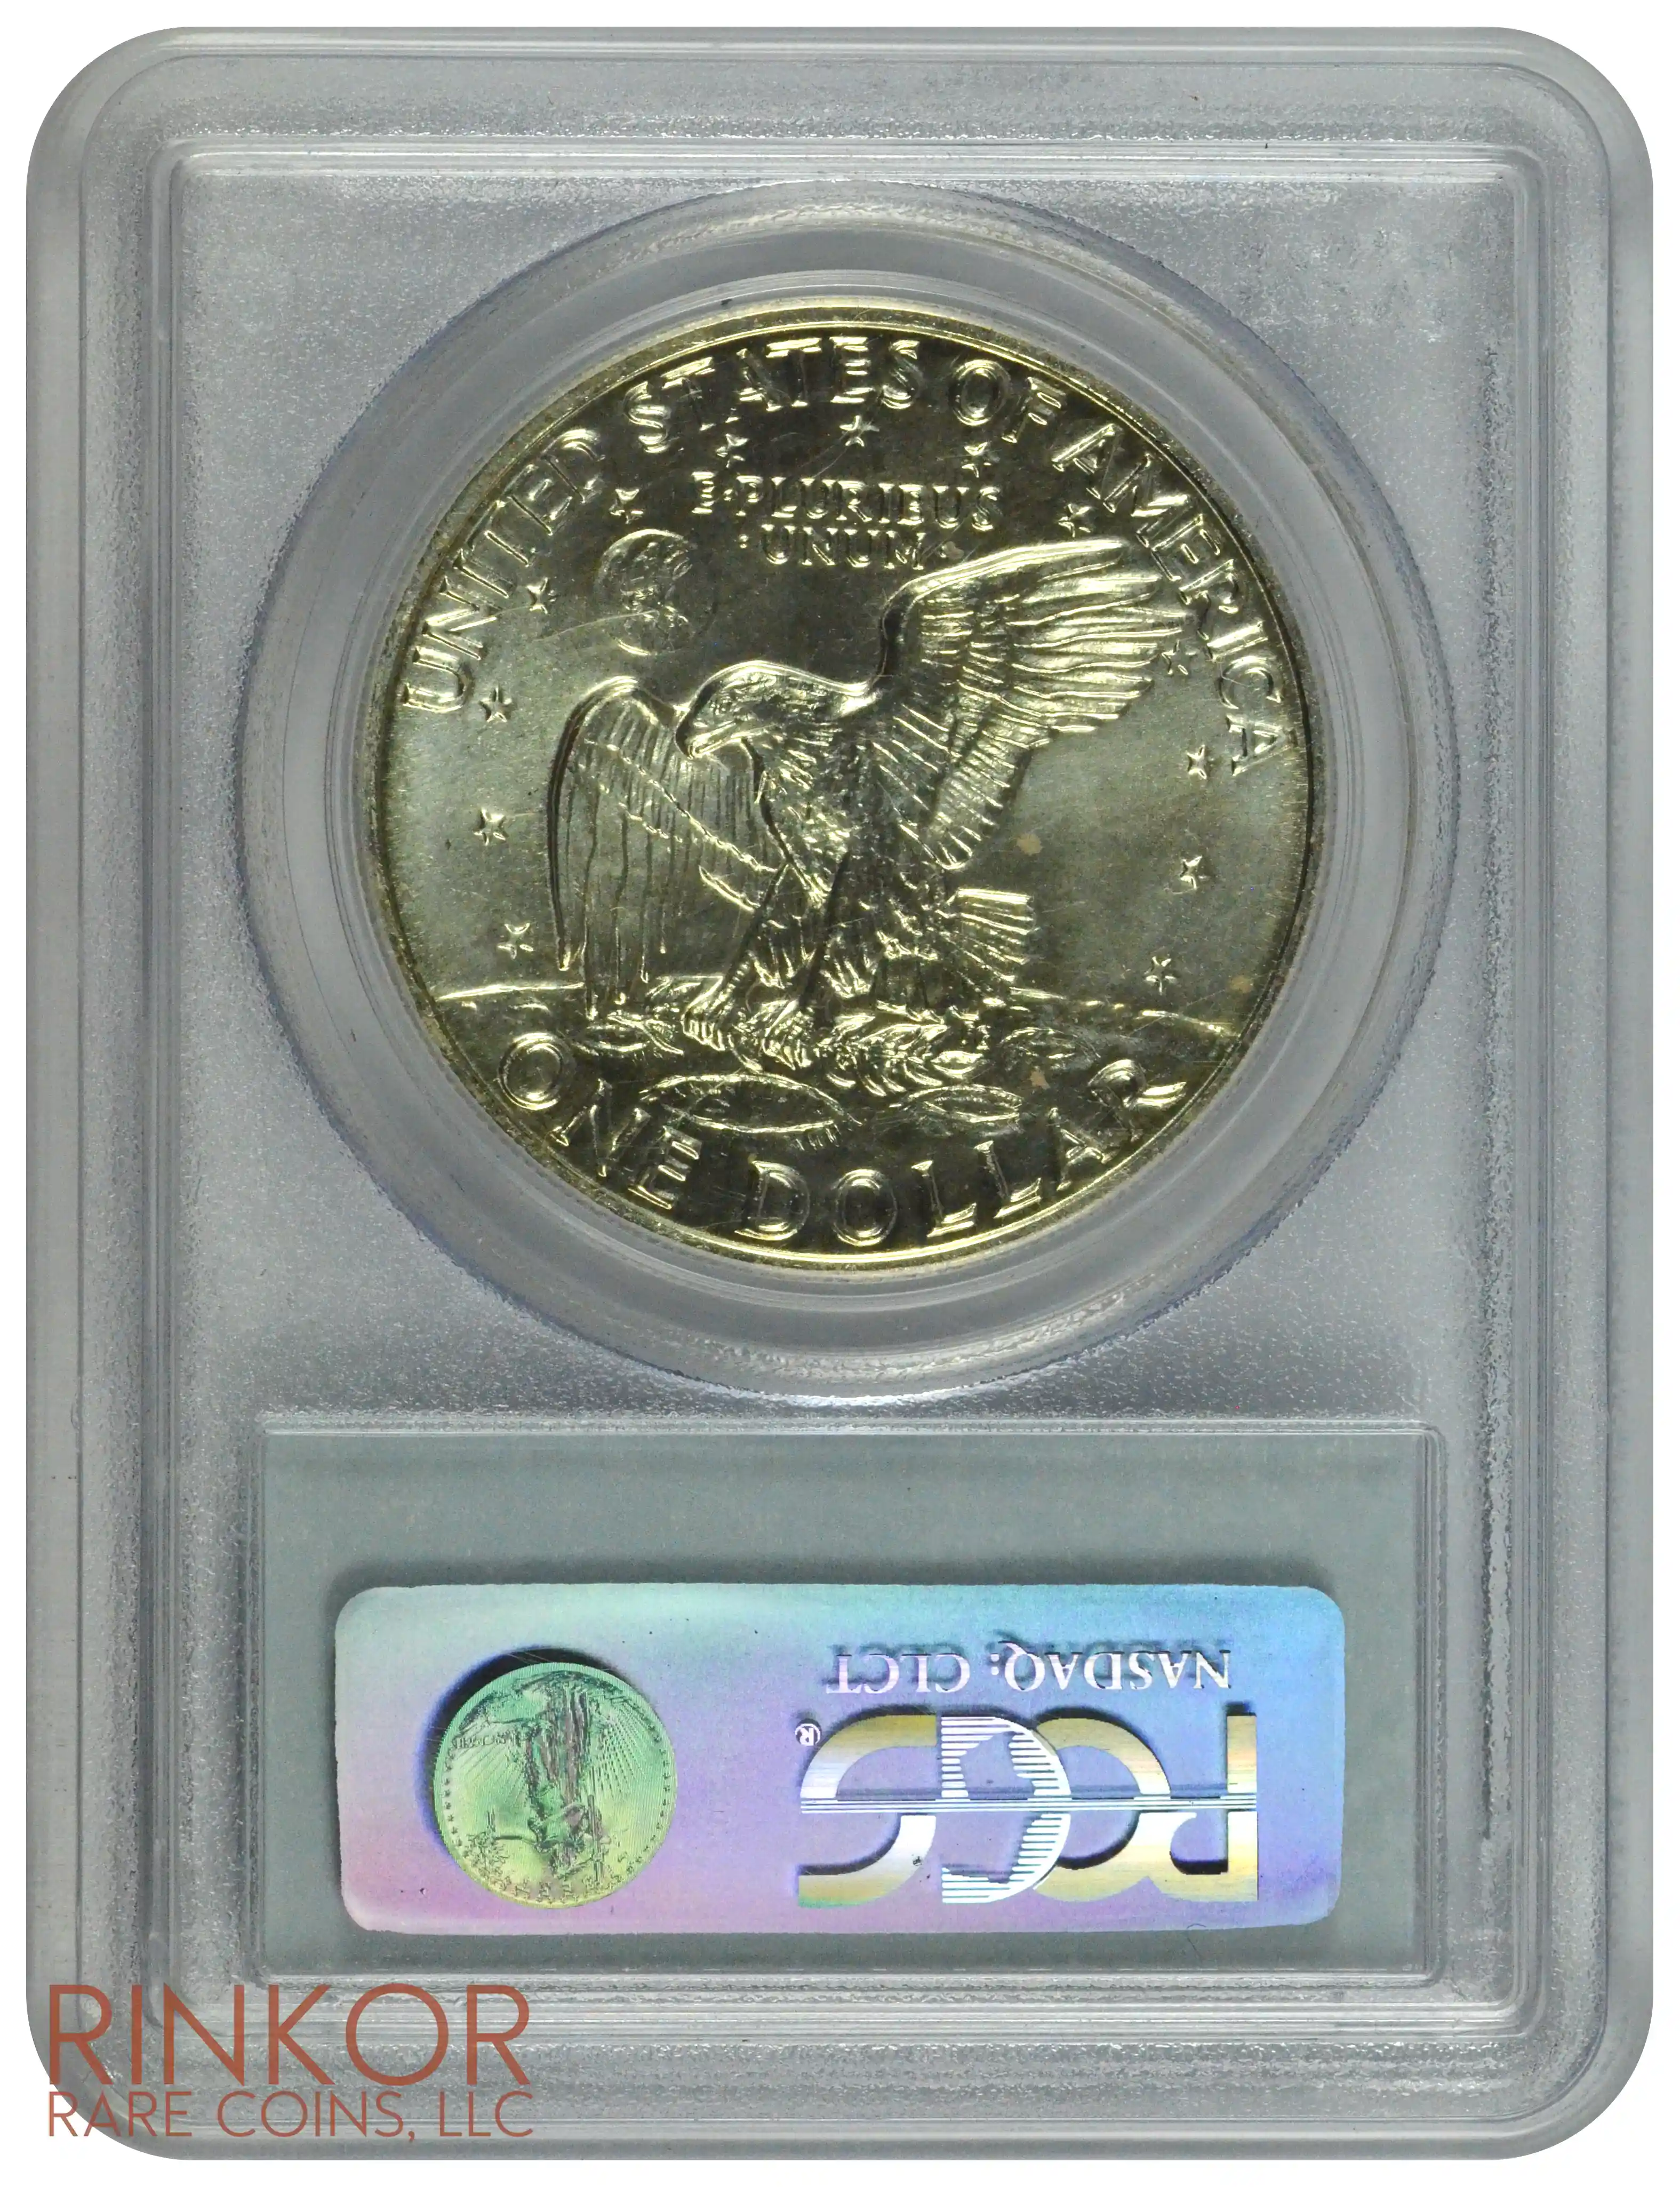 1972-S $1 Silver Eisenhower Dollar PCGS MS 68